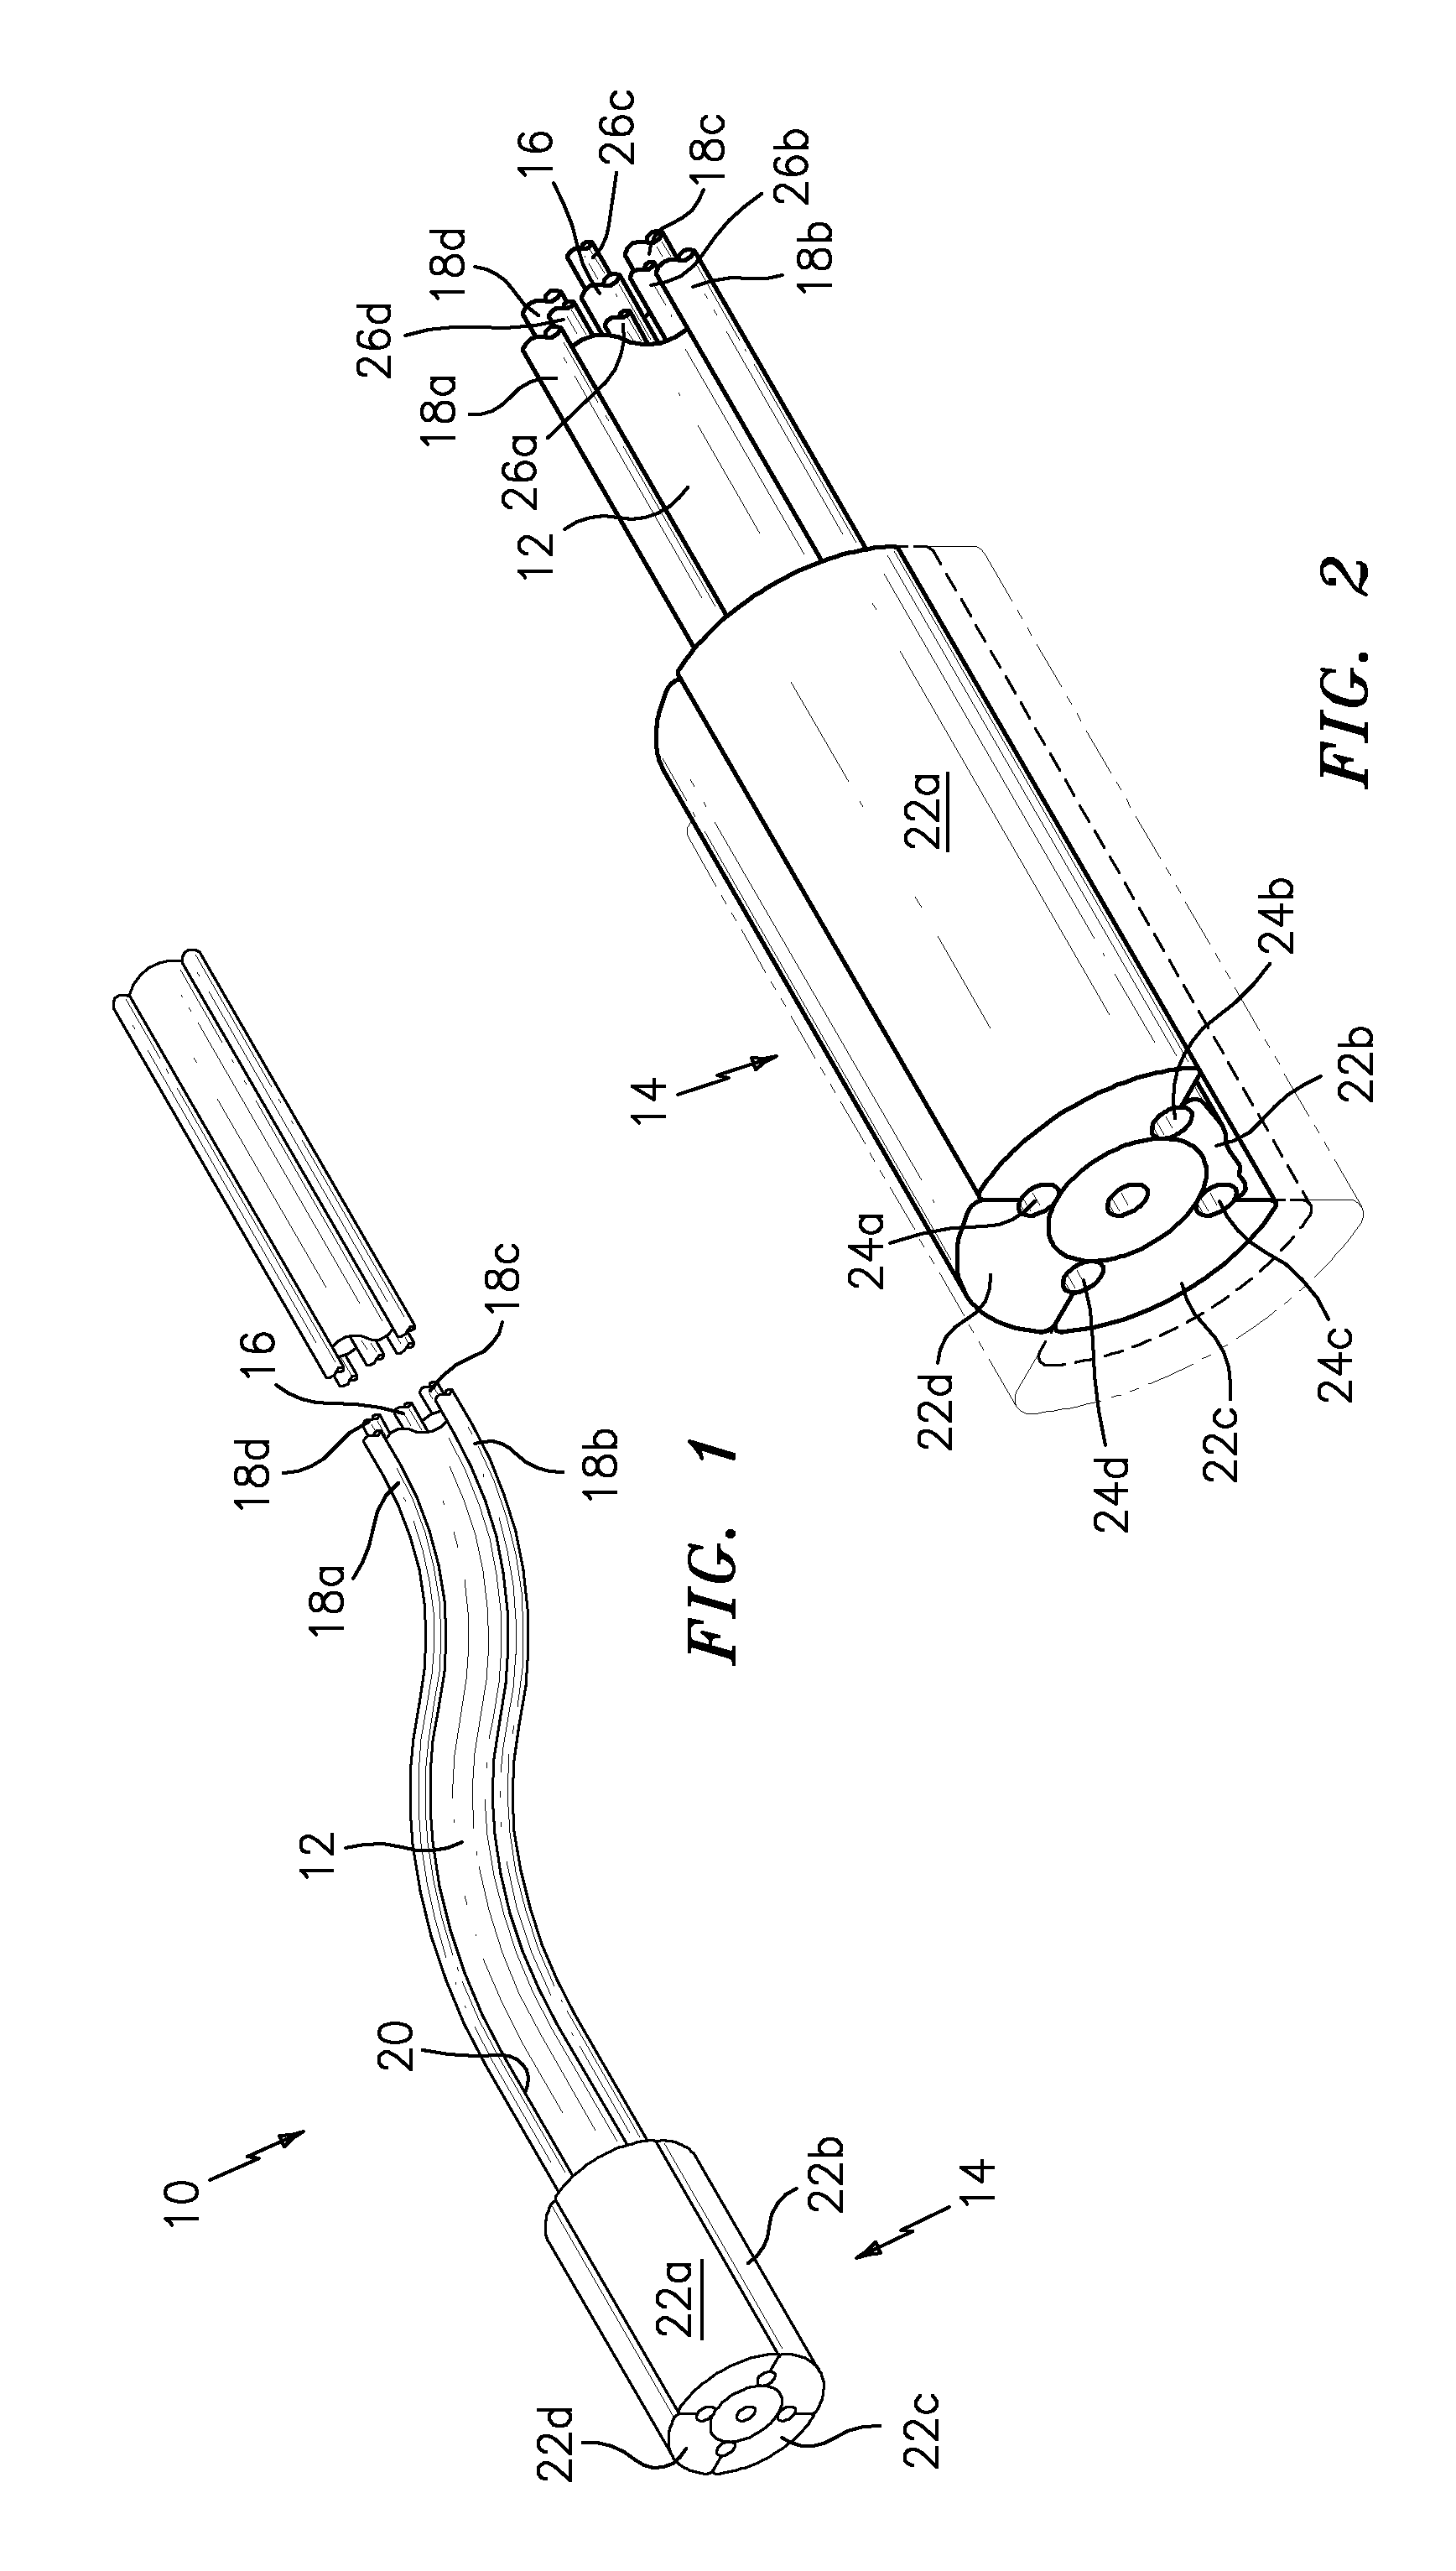 Balloon endoscope device